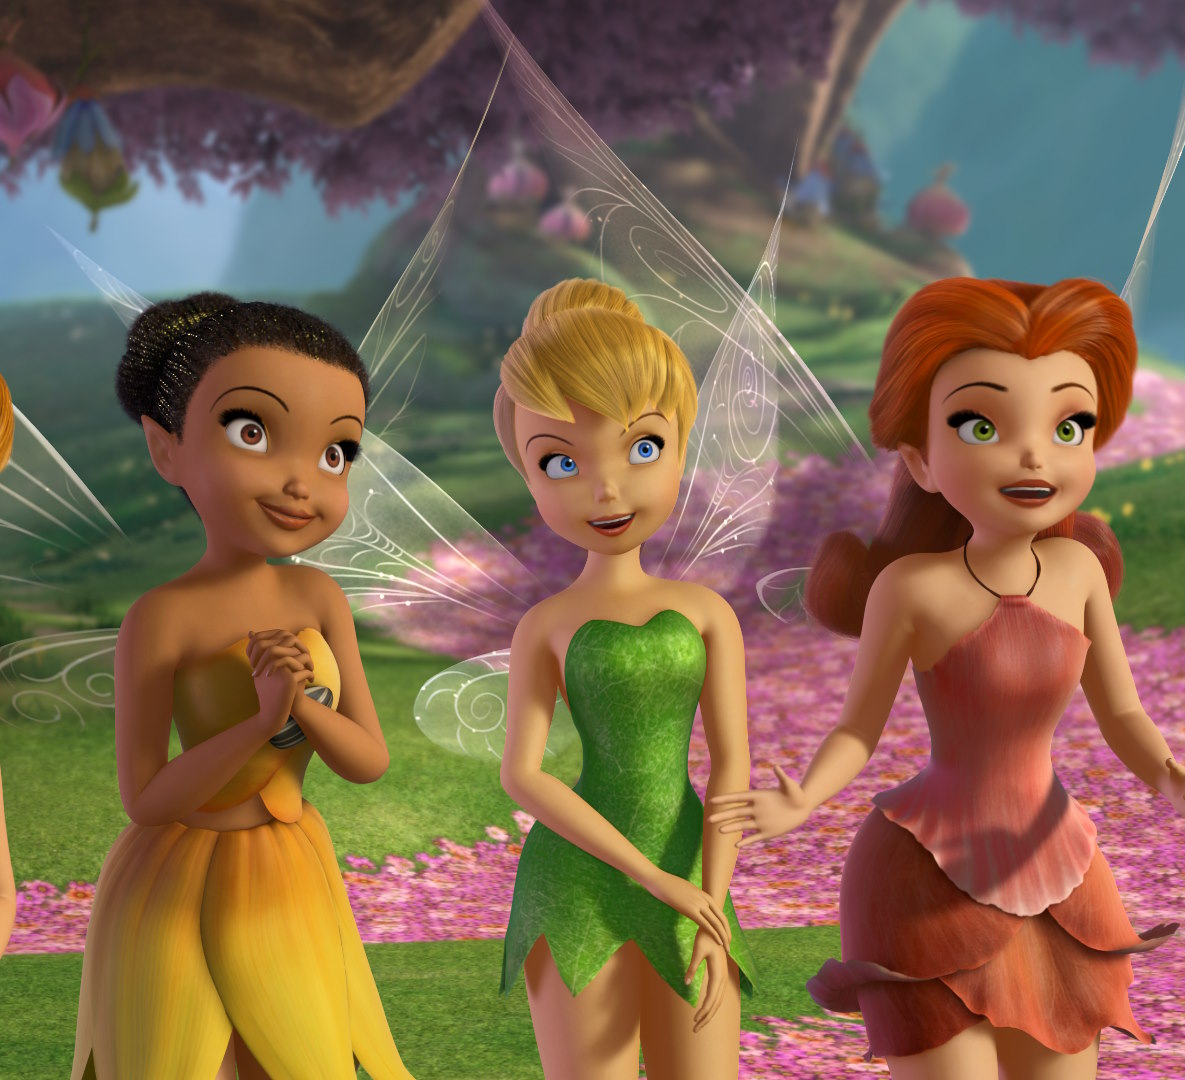 Tinker Bell et ses amis fées